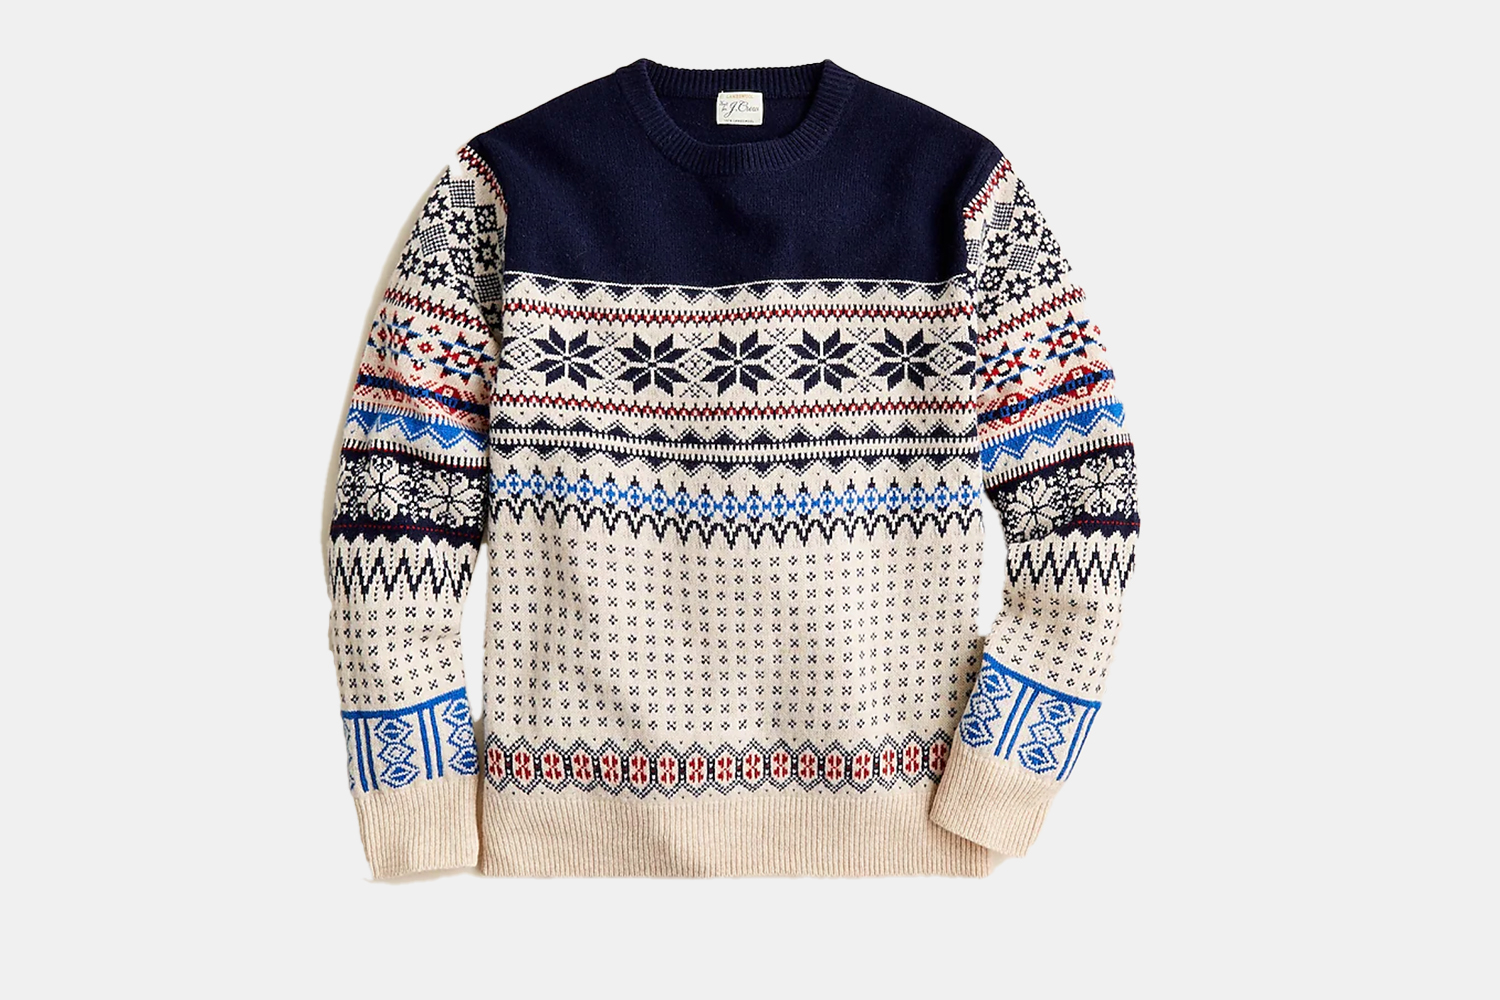 a fair isle cream and blue sweater